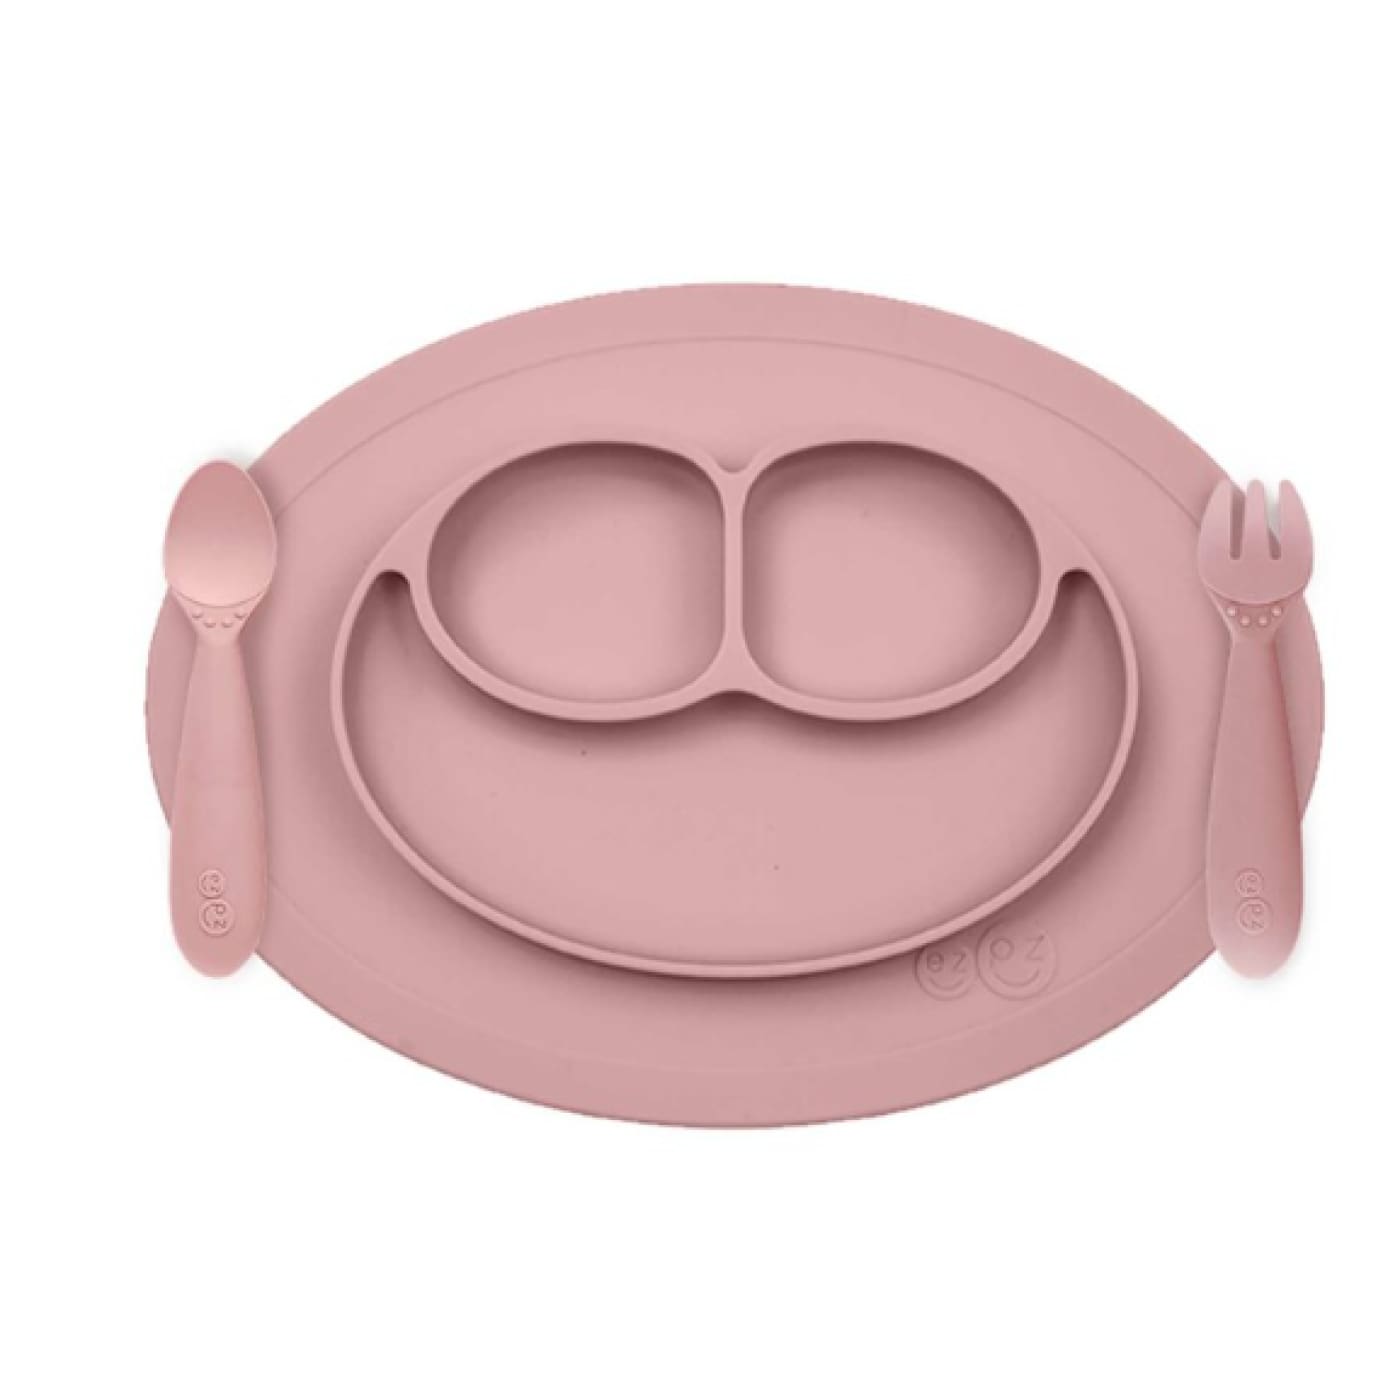 EZPZ Mini Feeding Set - Blush - Blush - NURSING & FEEDING - CUTLERY/PLATES/BOWLS/TOYS